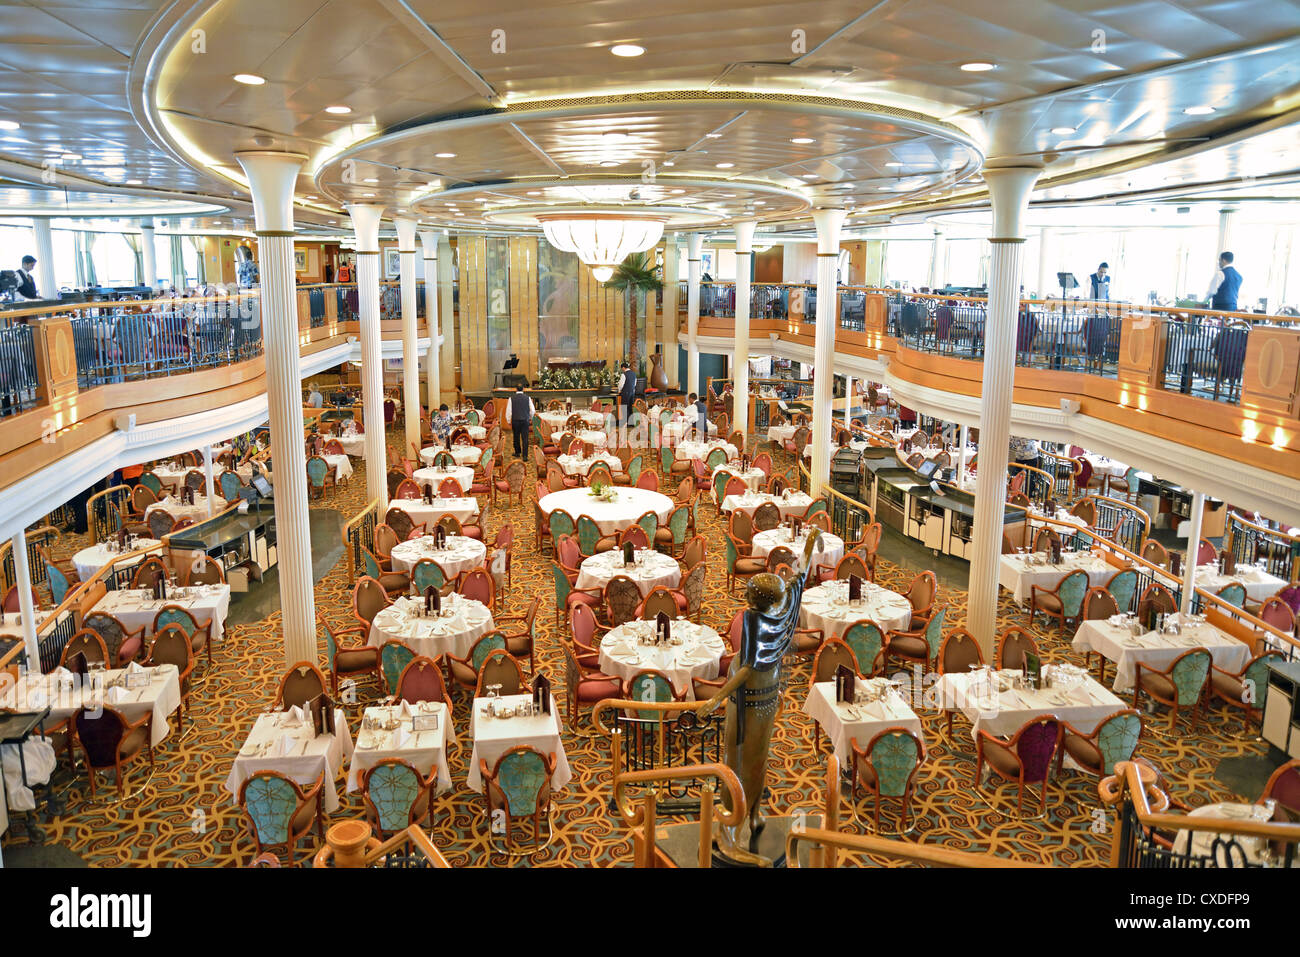 "The Great Gatsby" Speisesaal an Bord von Royal Caribbean "Grandeur of the Seas" Kreuzfahrtschiff, Adria, Mittelmeer, Europa Stockfoto